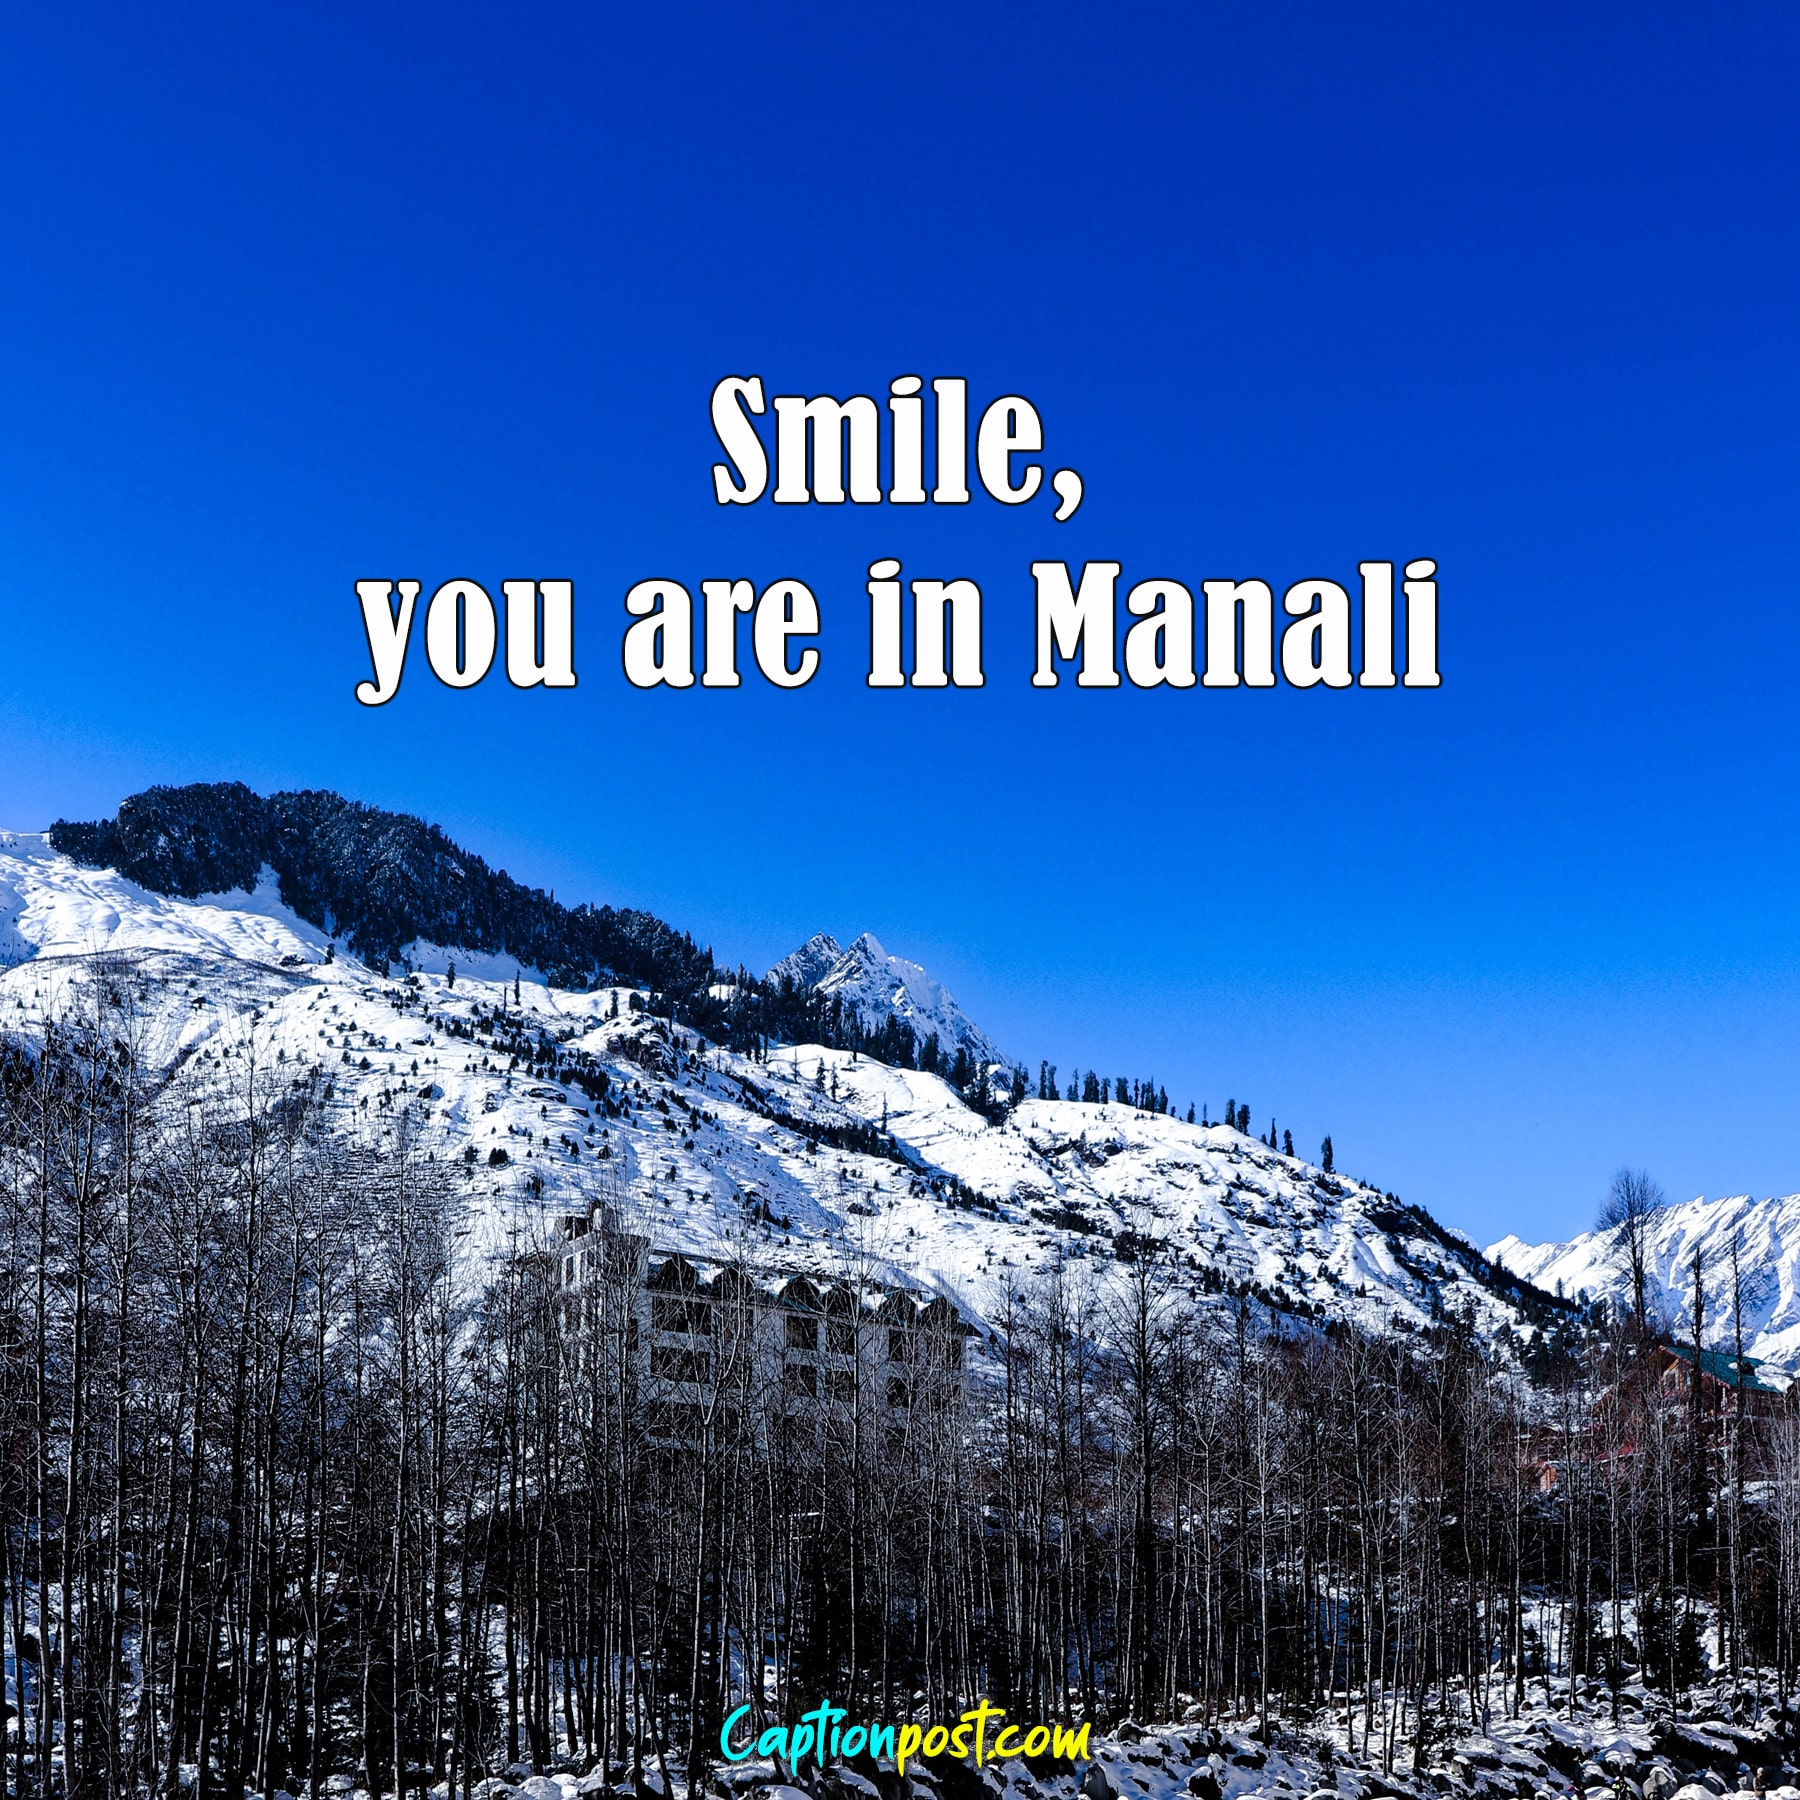 captions for manali trip photos